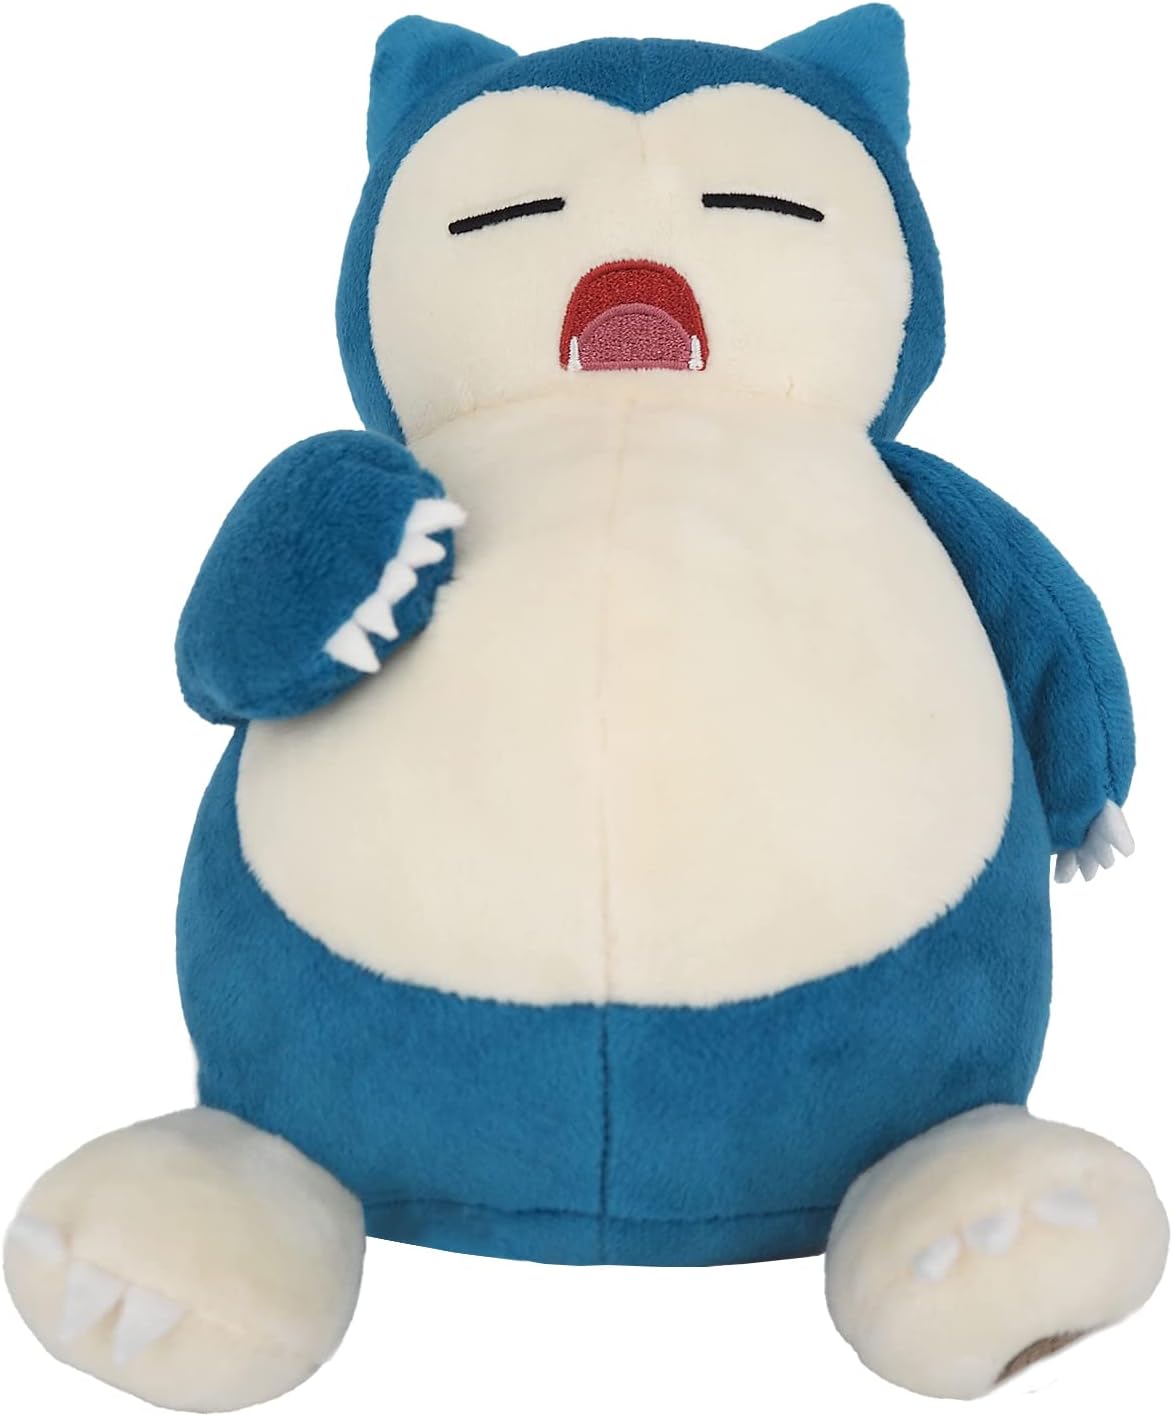 Pokémon Plush Doll Snorlax All Star Collection.